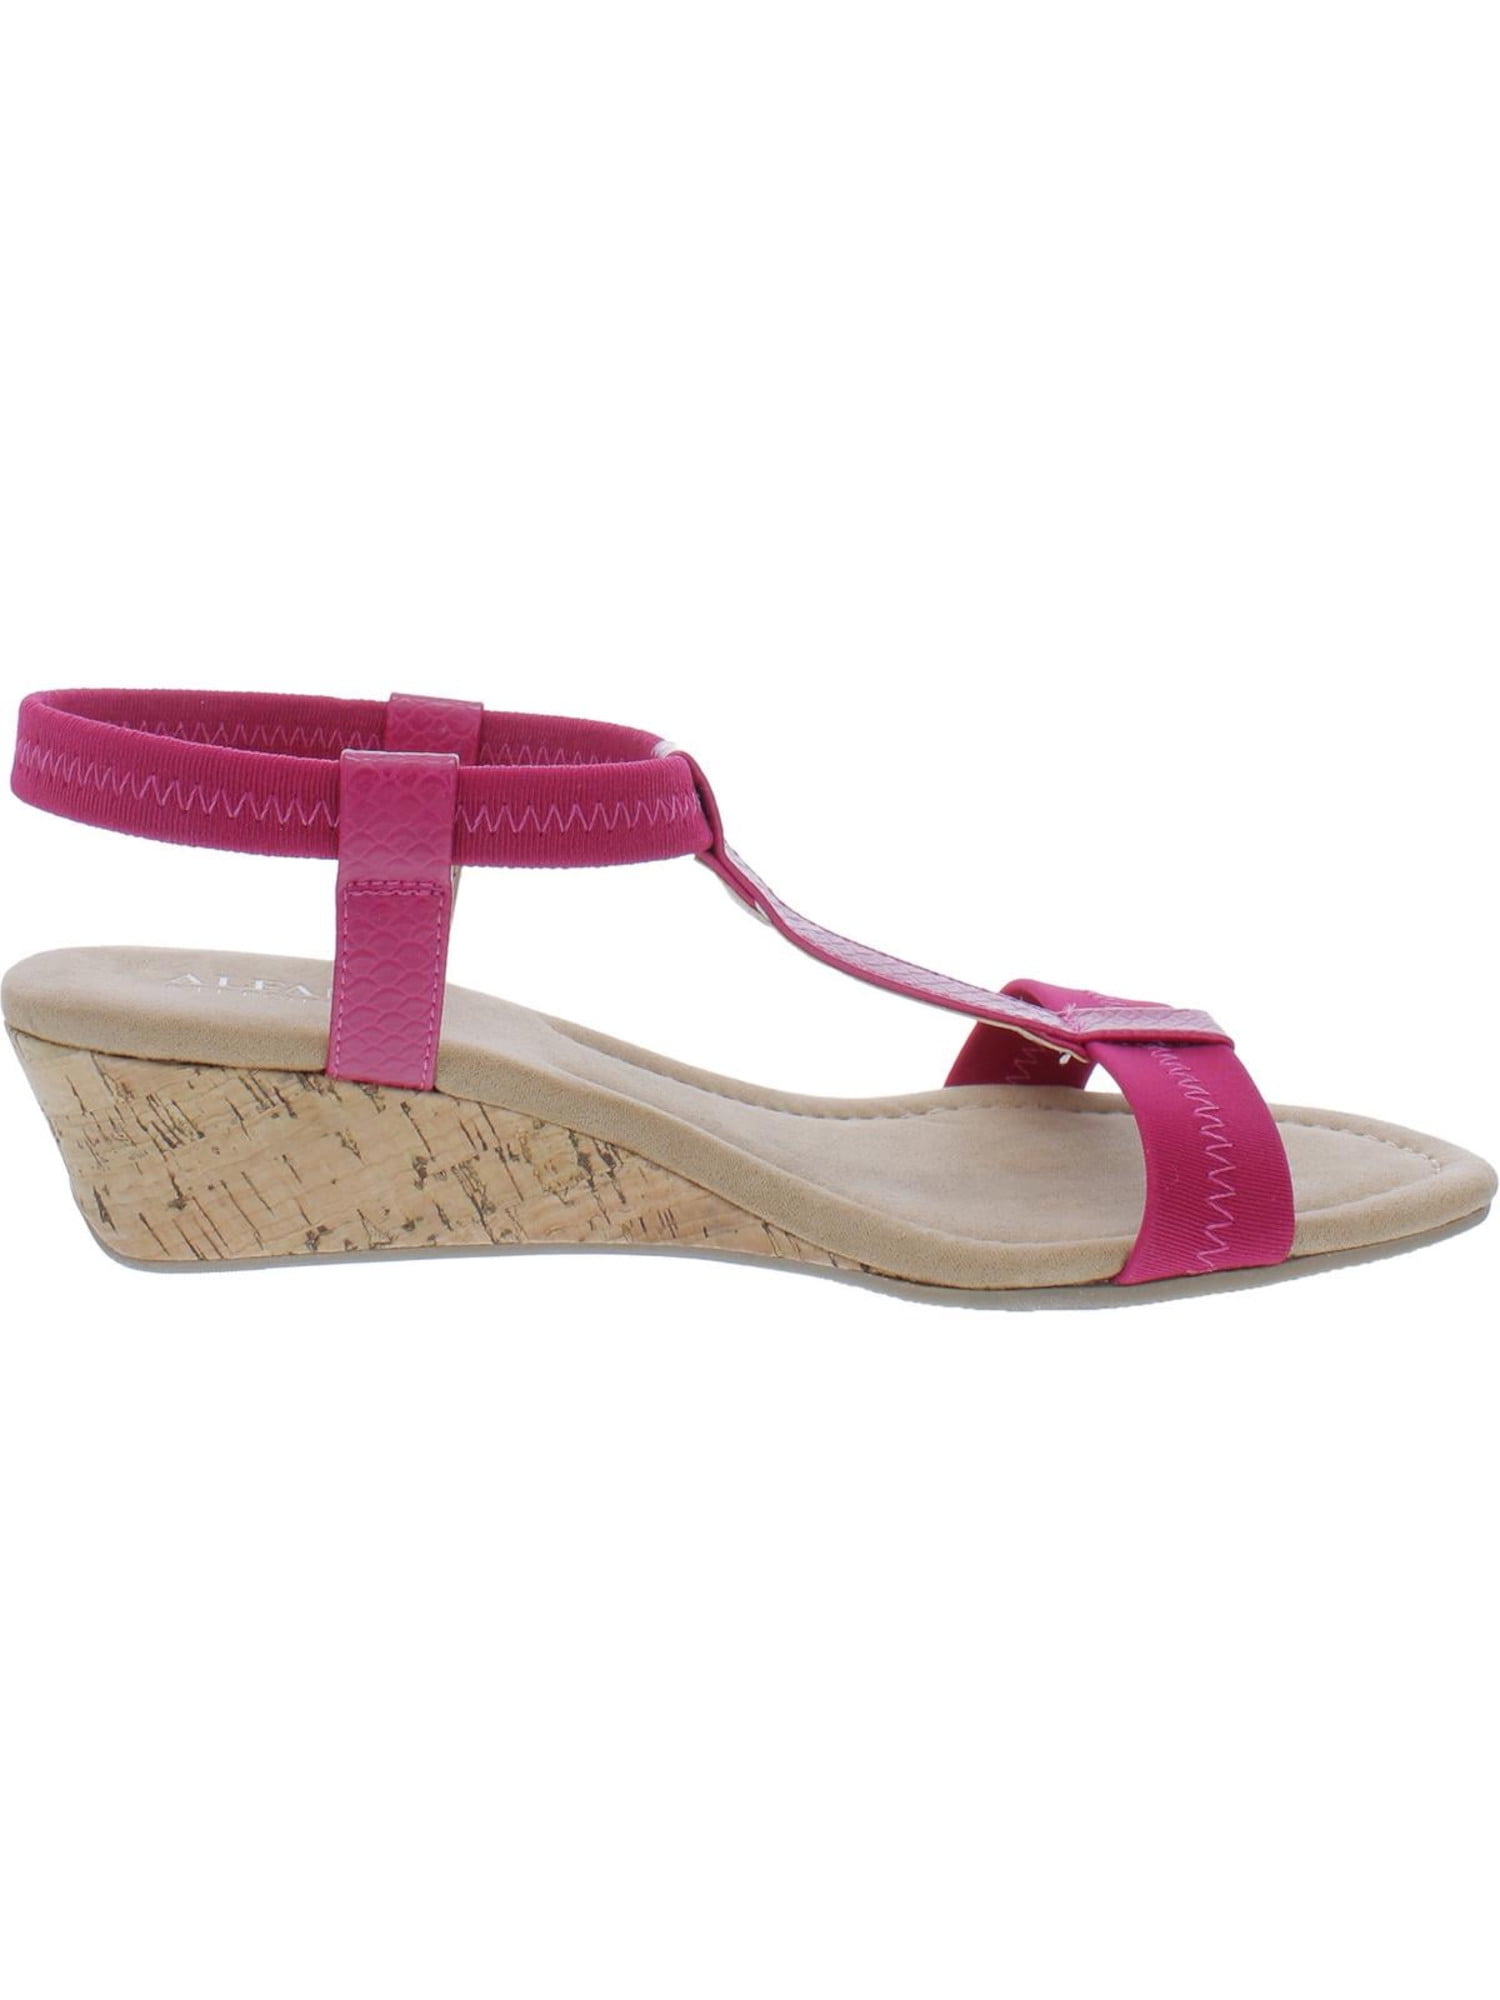  Alfani Womens Voyage Faux Leather T Strap Wedge Sandals Gold  10.5 Medium (B,M)